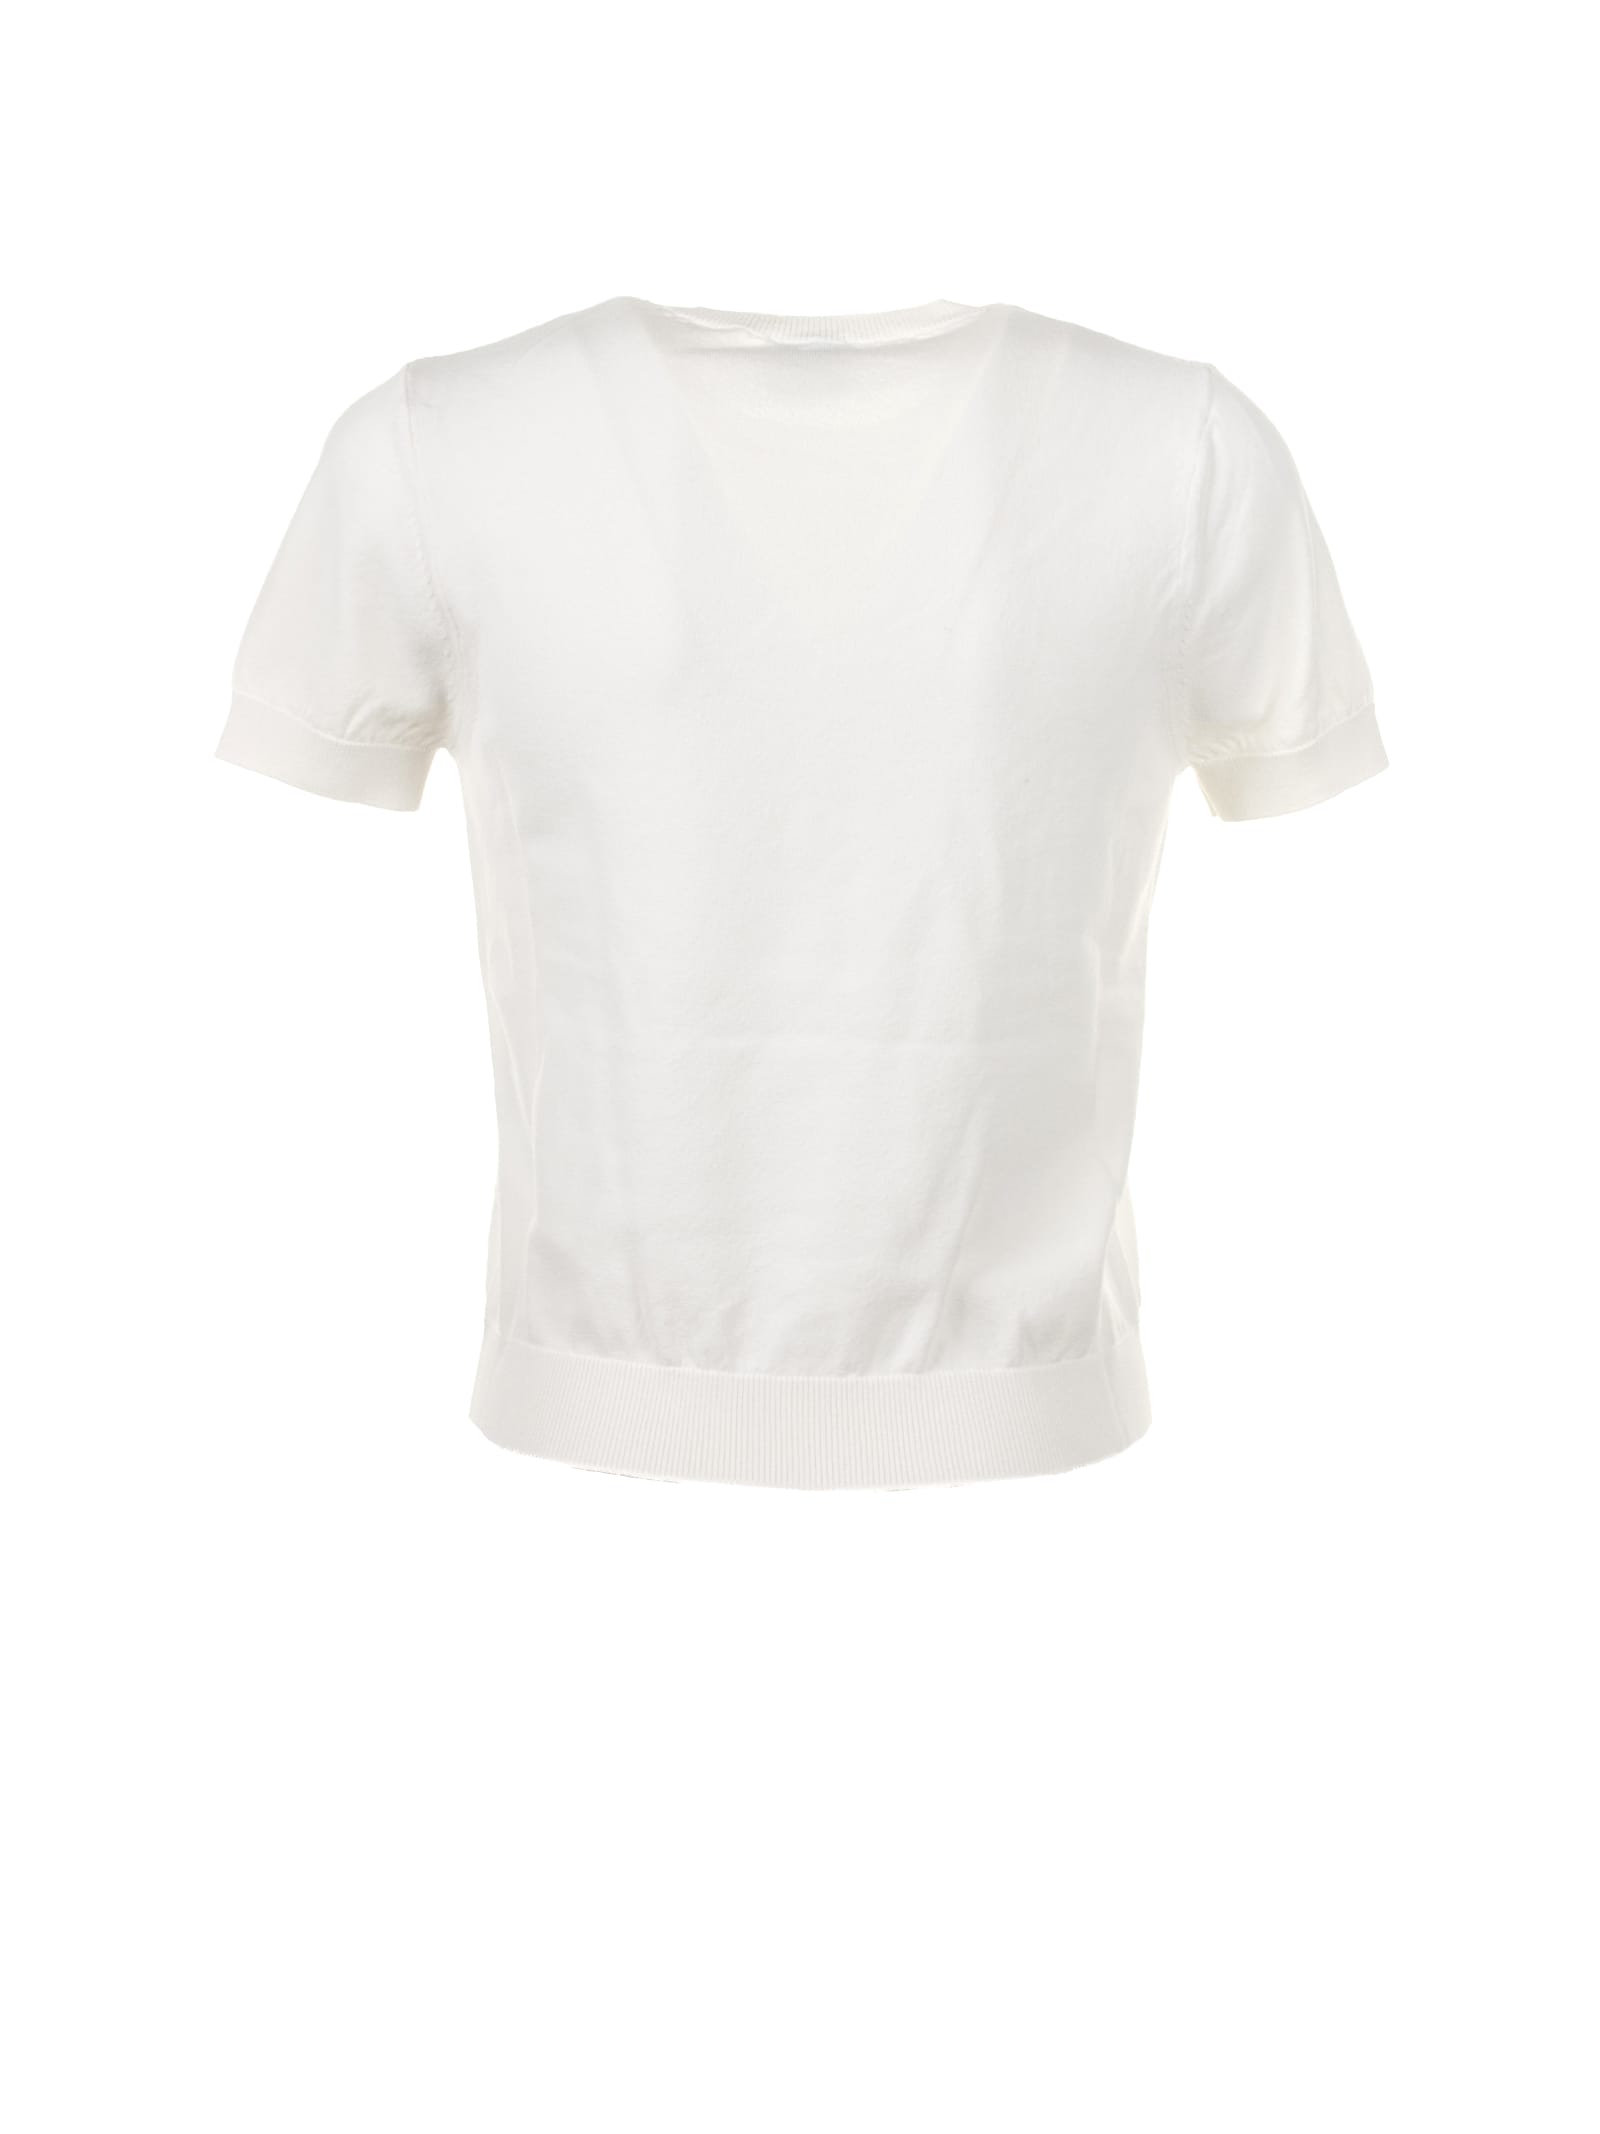 Shop Cruna White Cotton Thread T-shirt In Burro